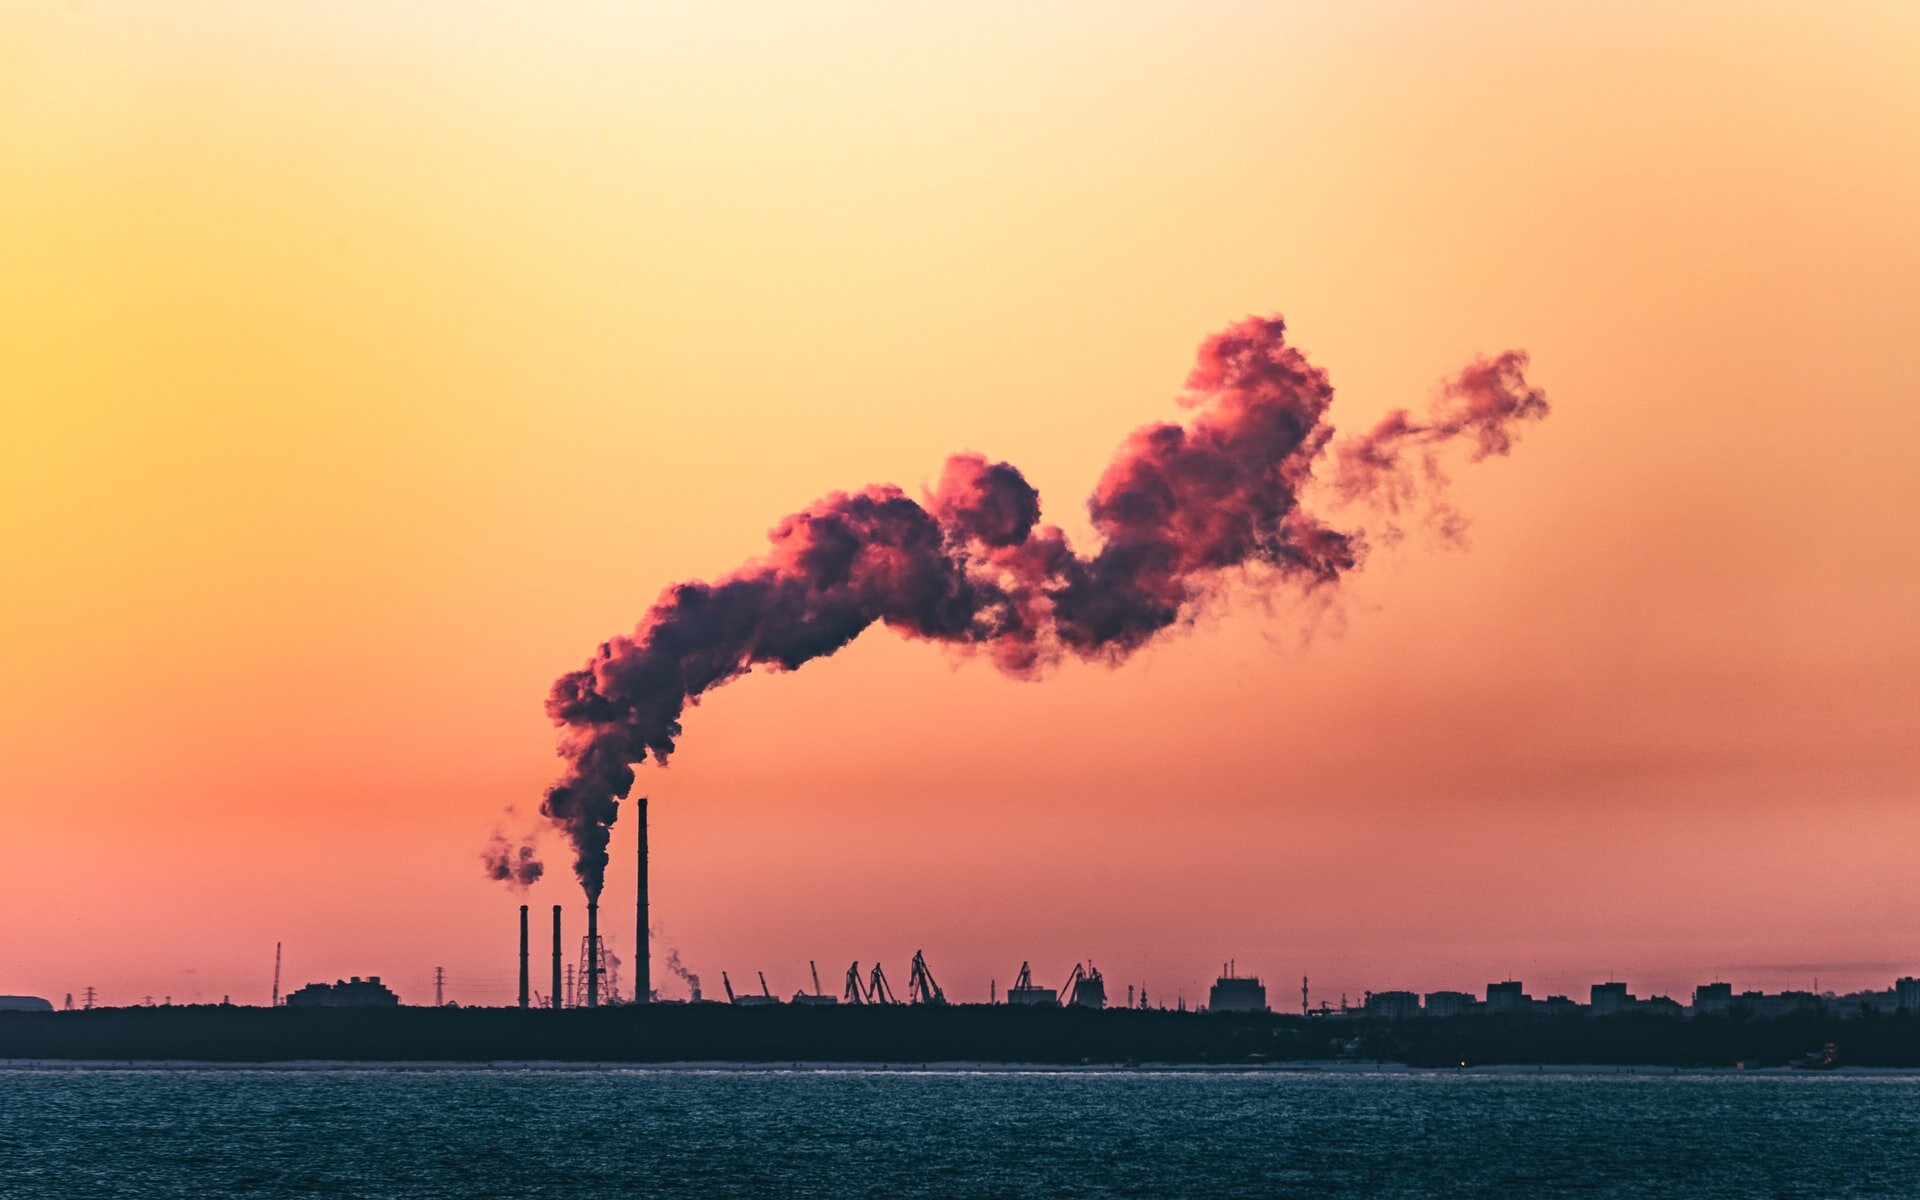 Industry emissions in Gdańsk, Poland. EU Emissions Trading System allowances